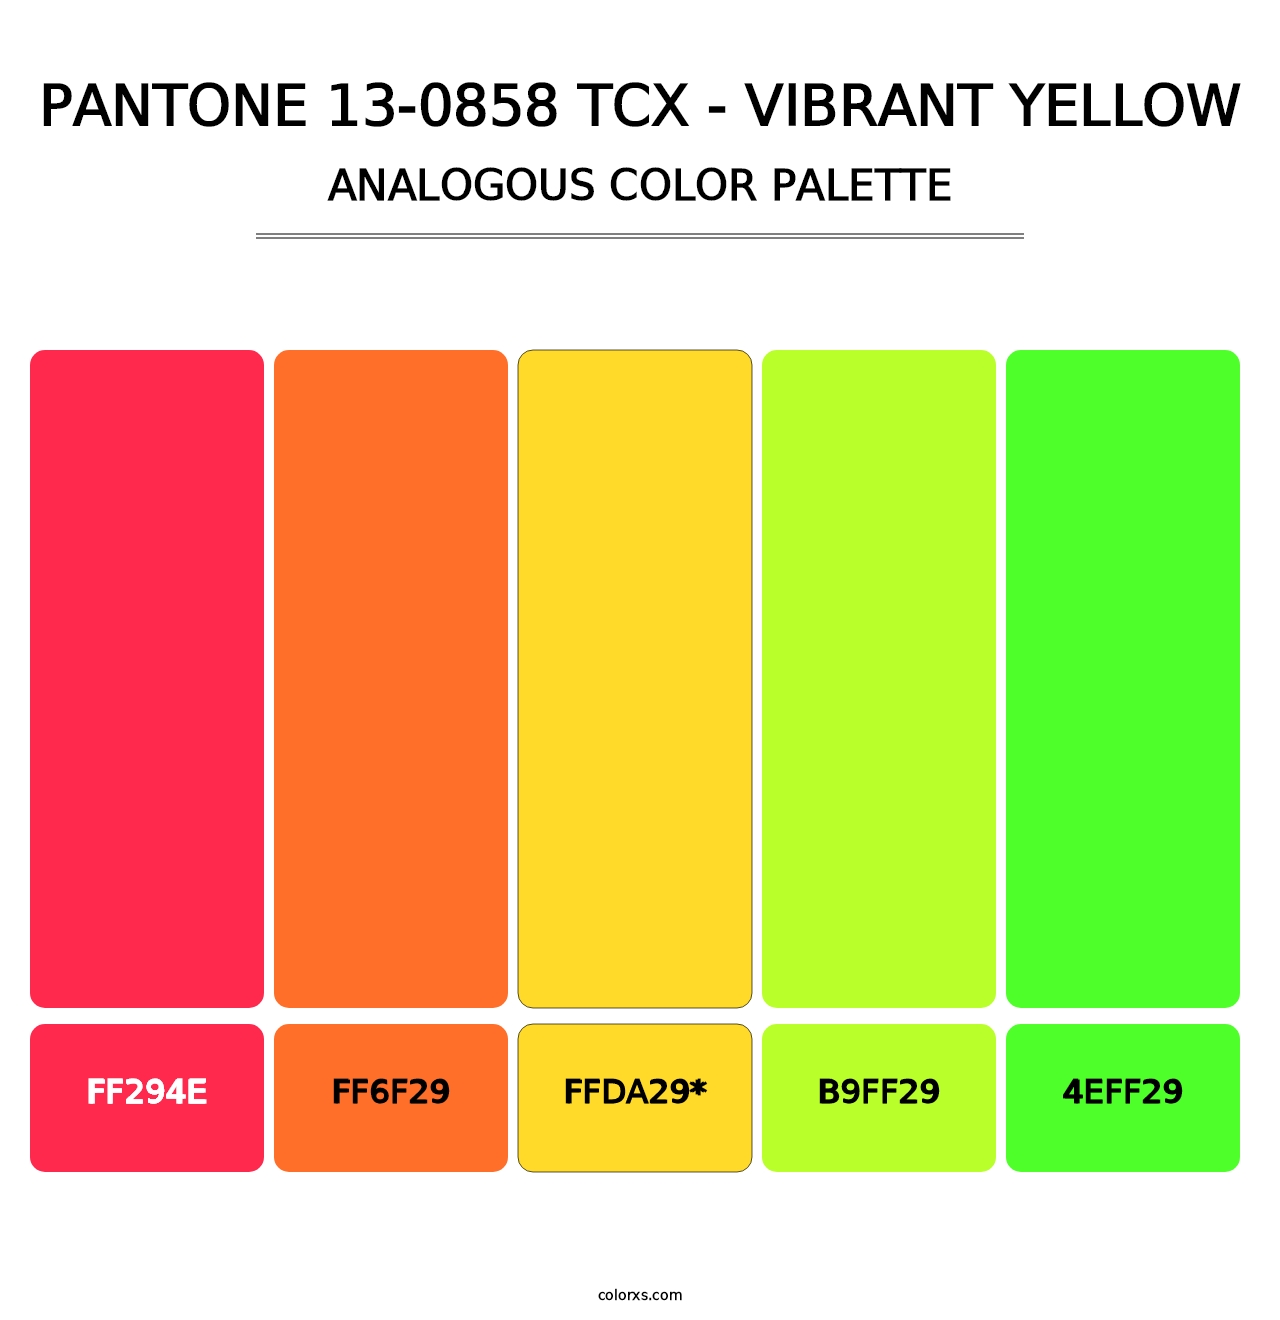 PANTONE 13-0858 TCX - Vibrant Yellow - Analogous Color Palette